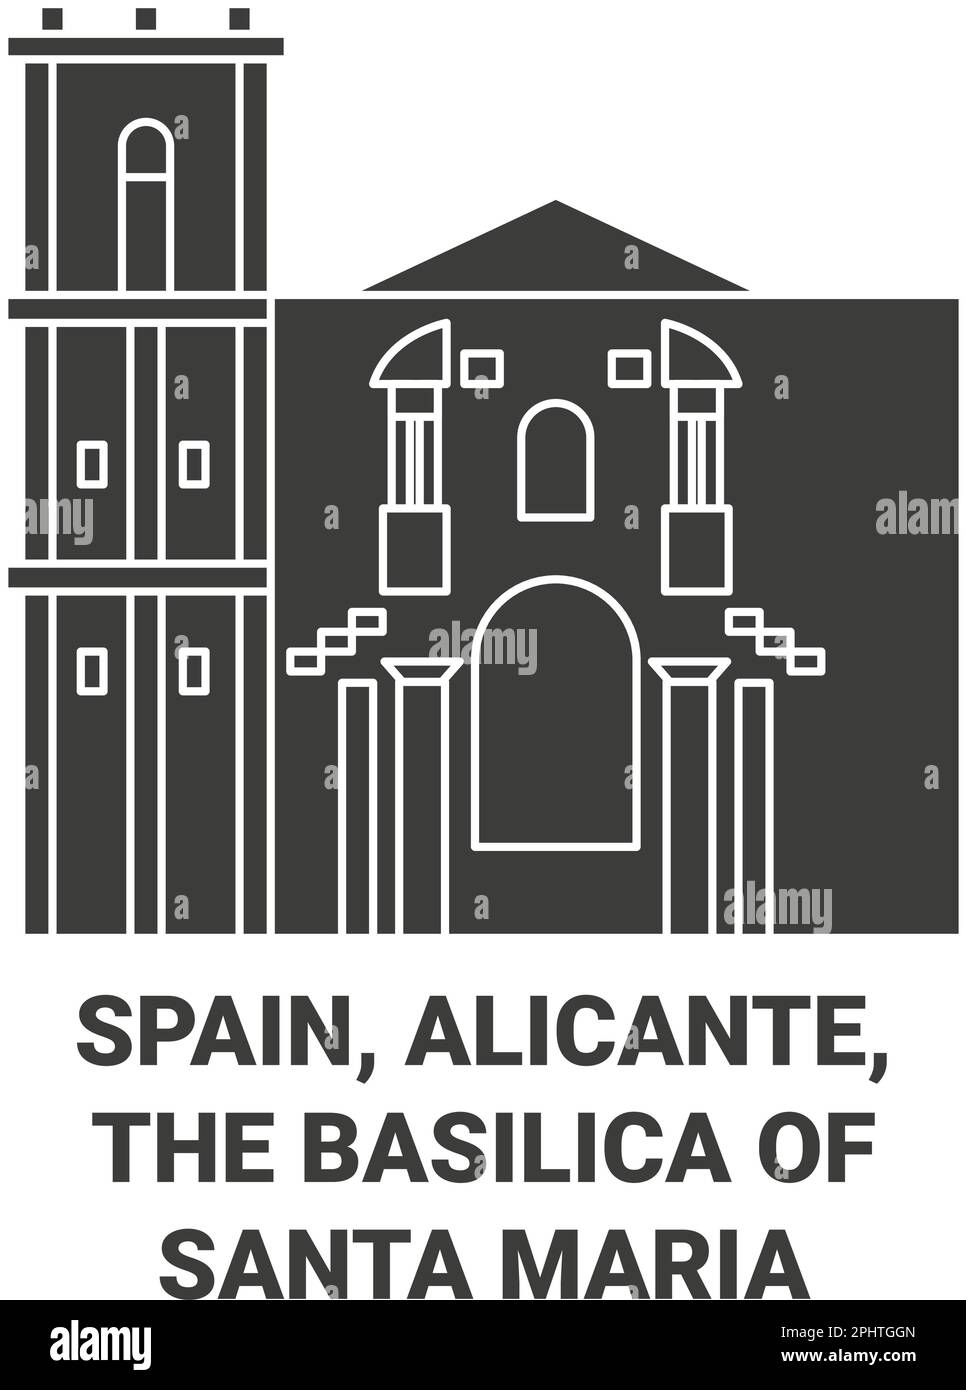 Spain, Alicante, The Basilica Of Santa Maria travel landmark vector illustration Stock Vector